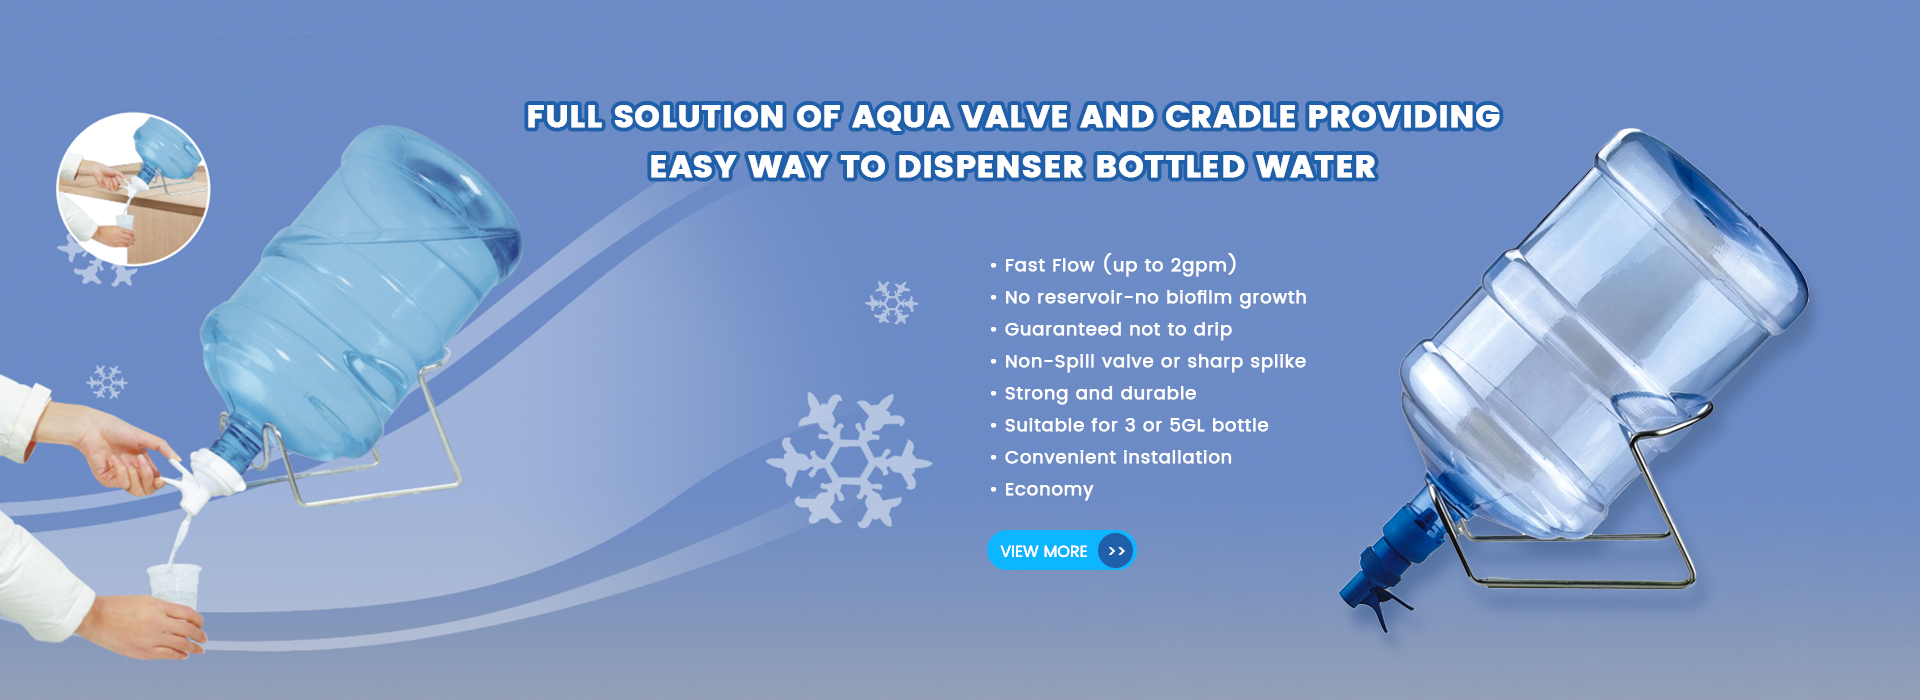 5 Gallon bottle with aqua valve